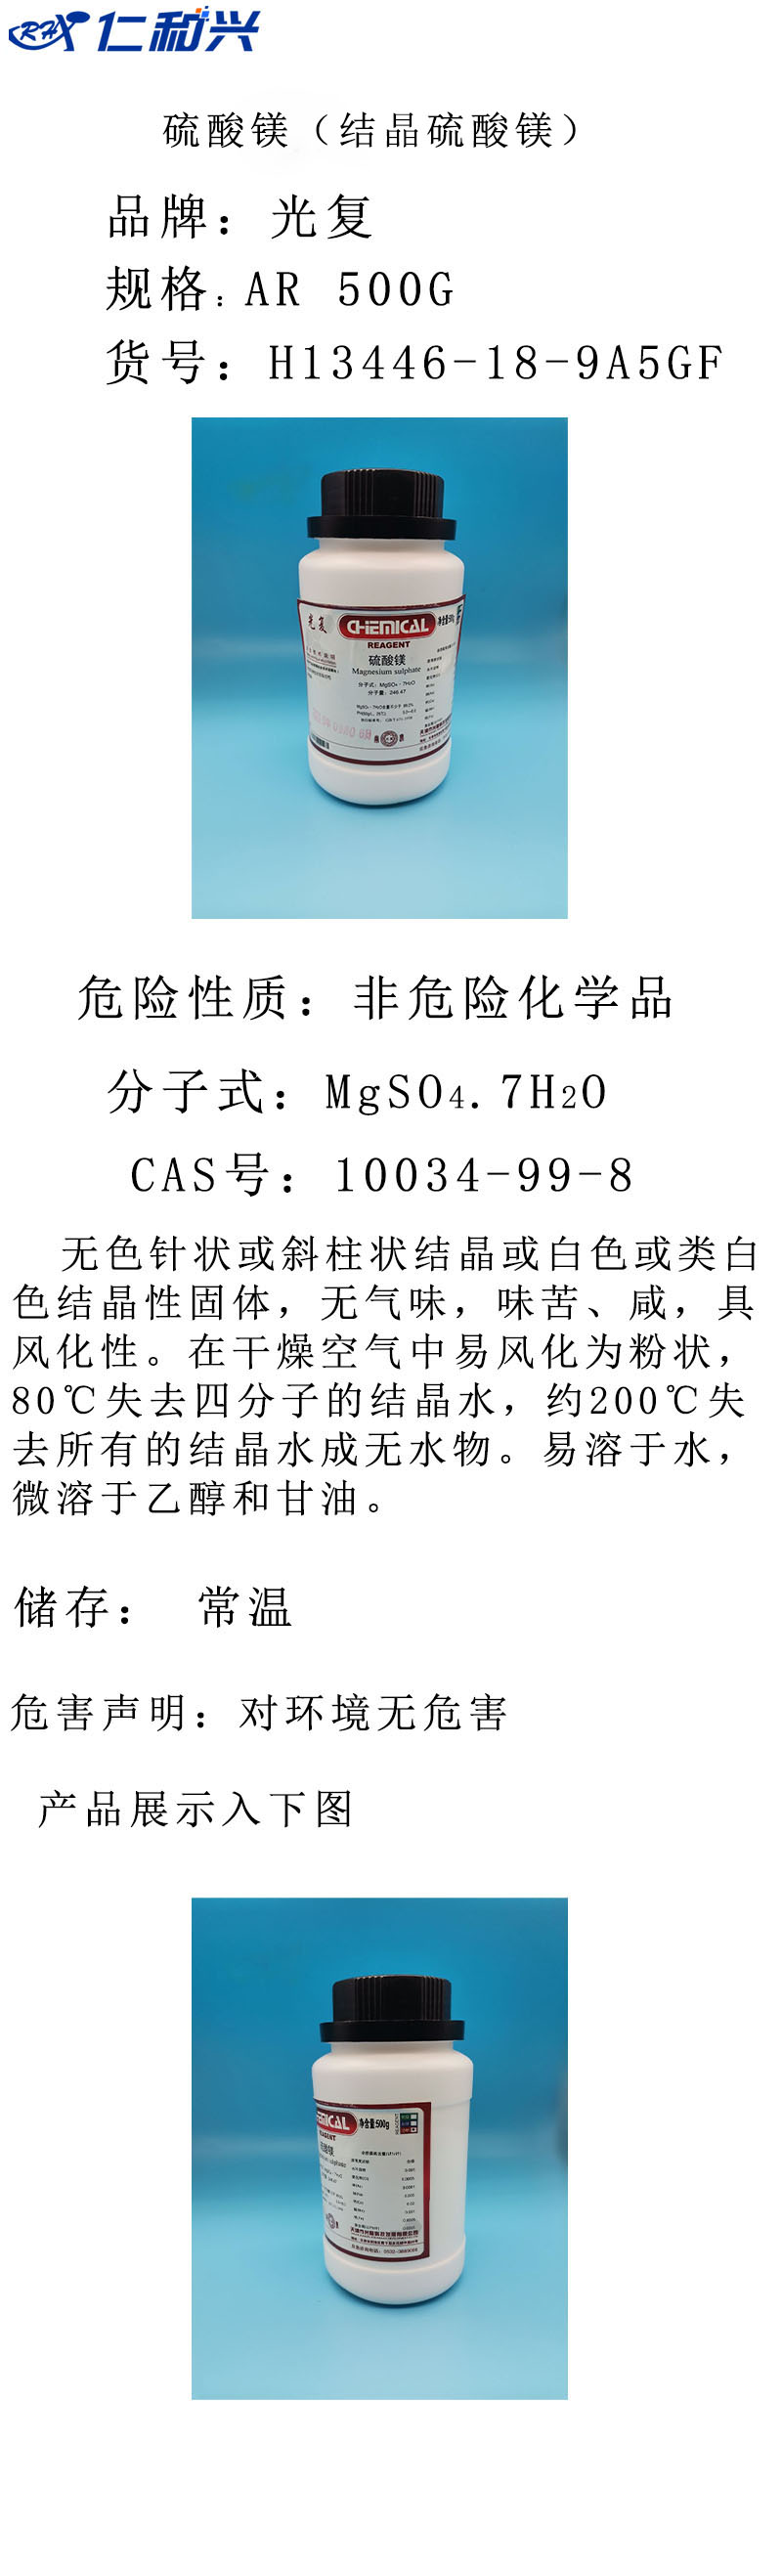 H13446-18-9A5GF济南库 硫酸镁（结晶硫酸镁）.jpg